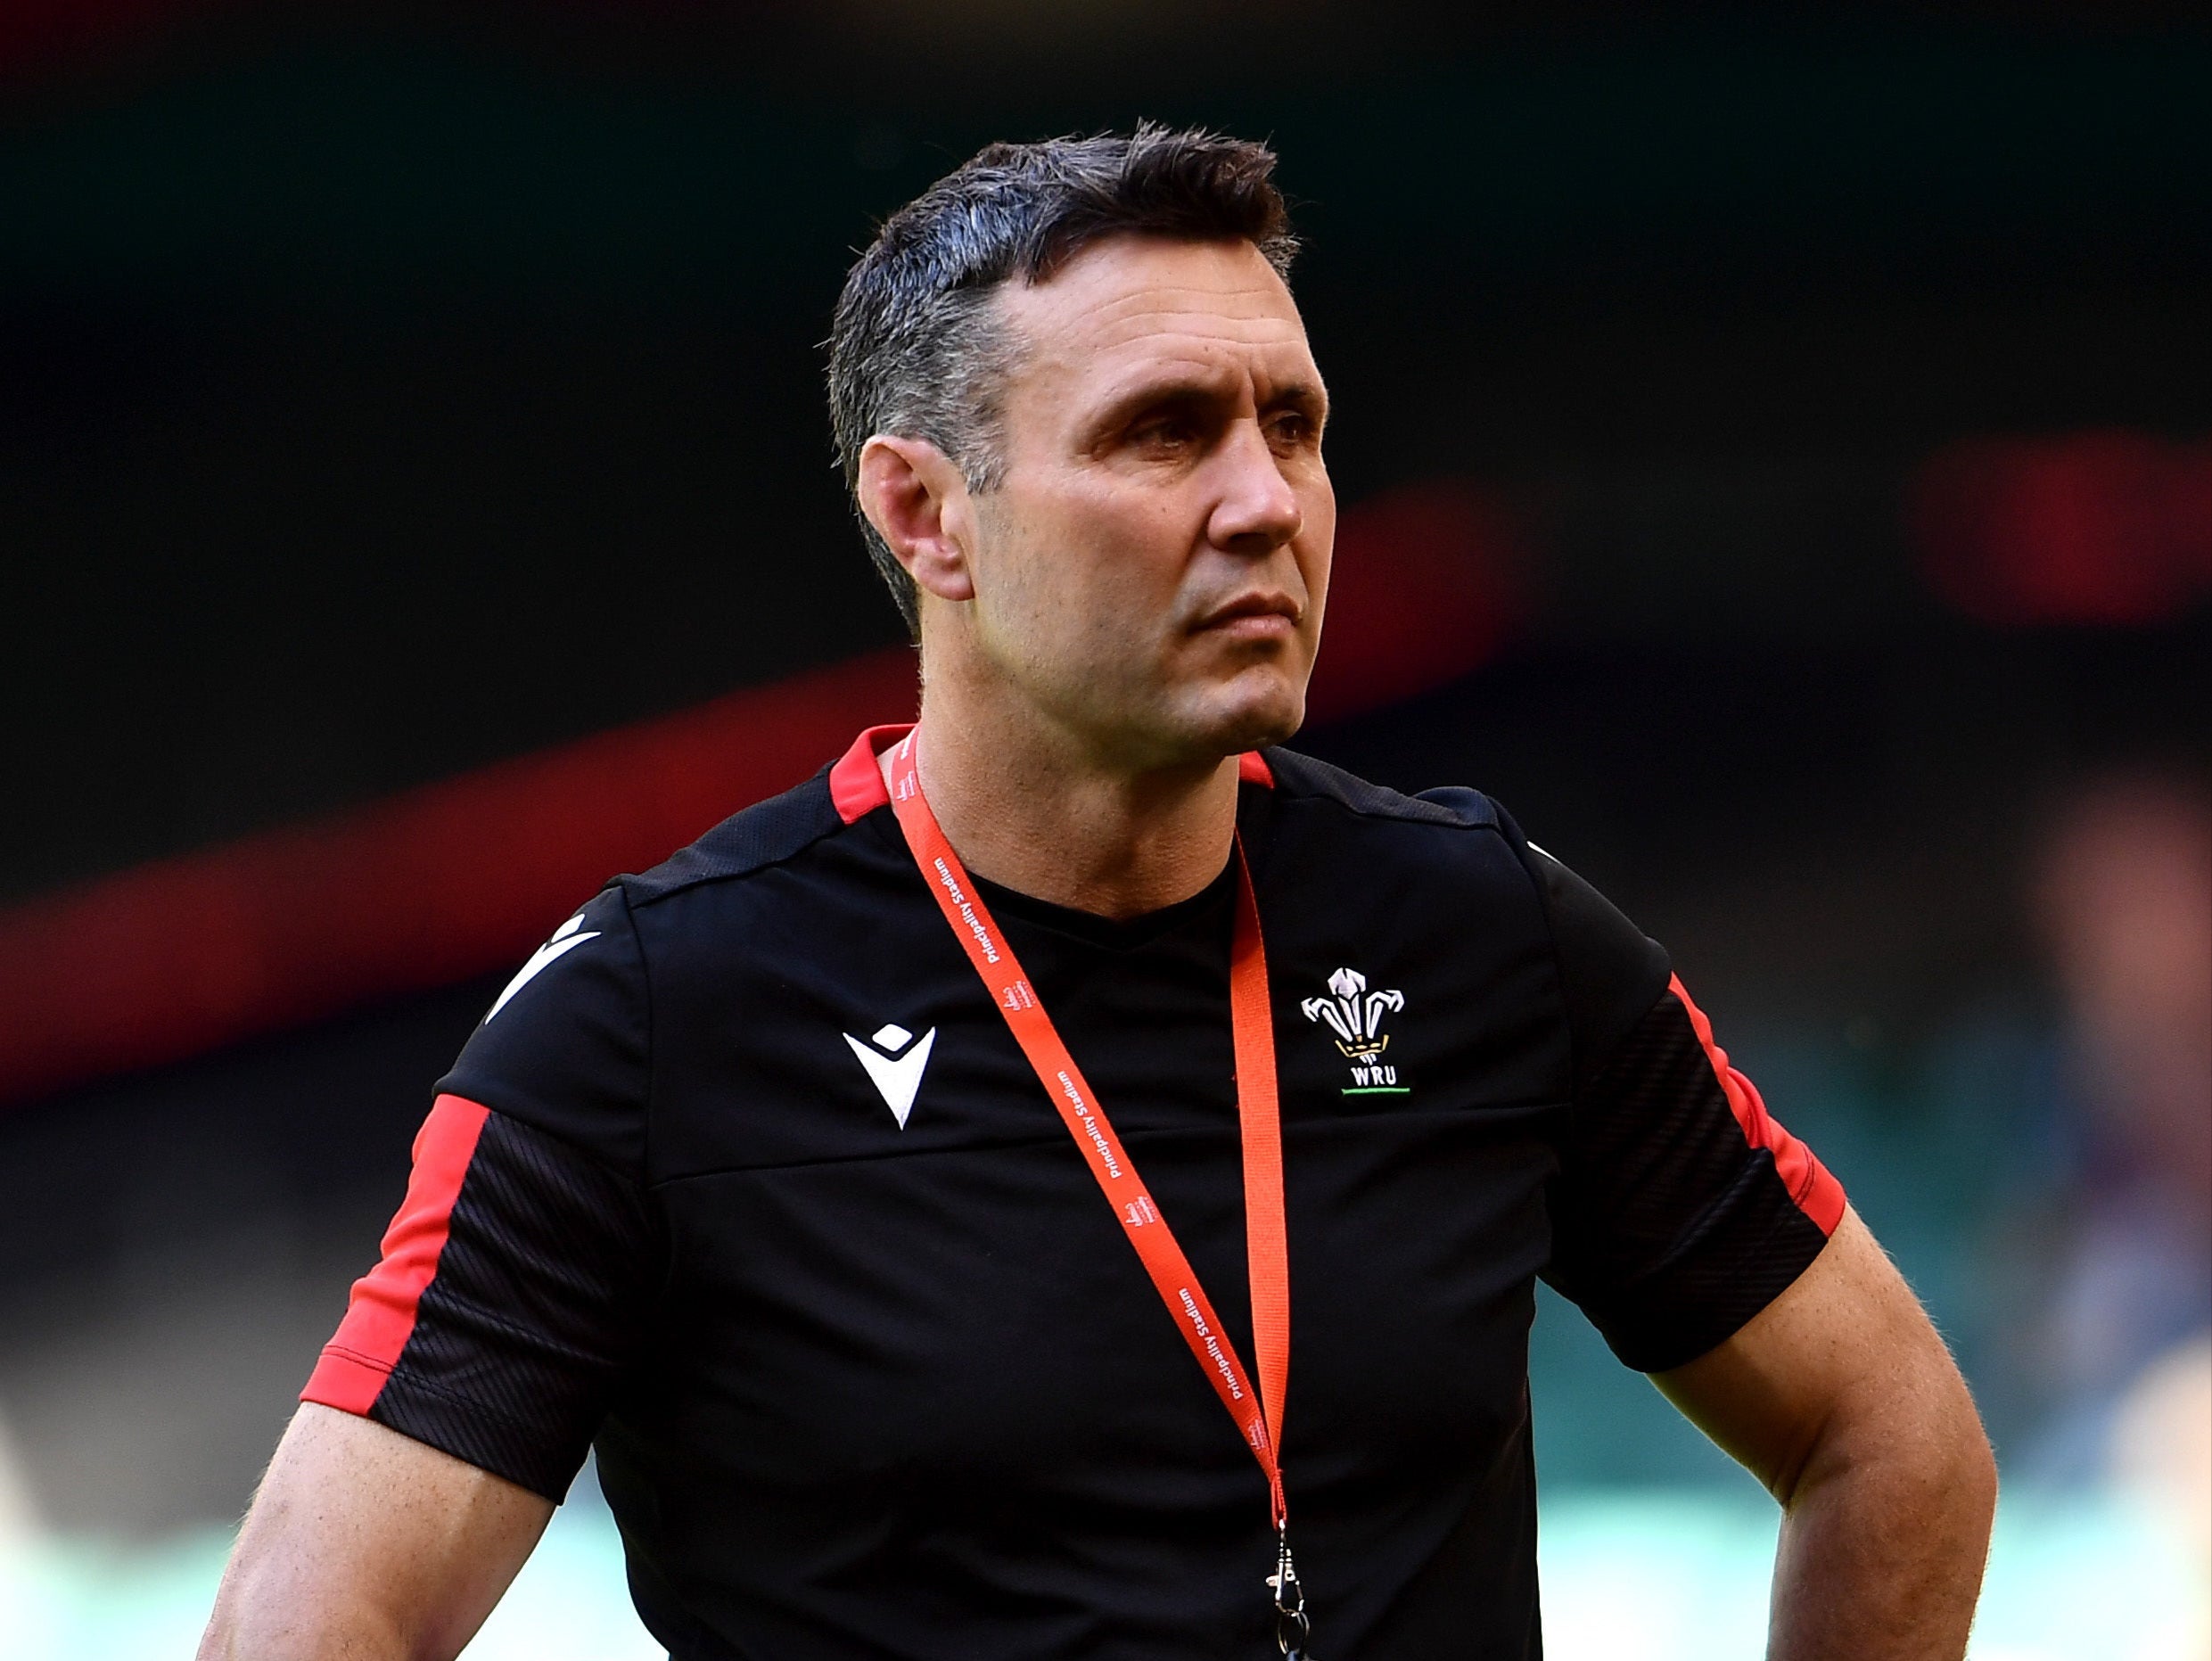 Wales assistant coach Stephen Jones has lavished praise on Dan Biggar and Alun Wyn Jones